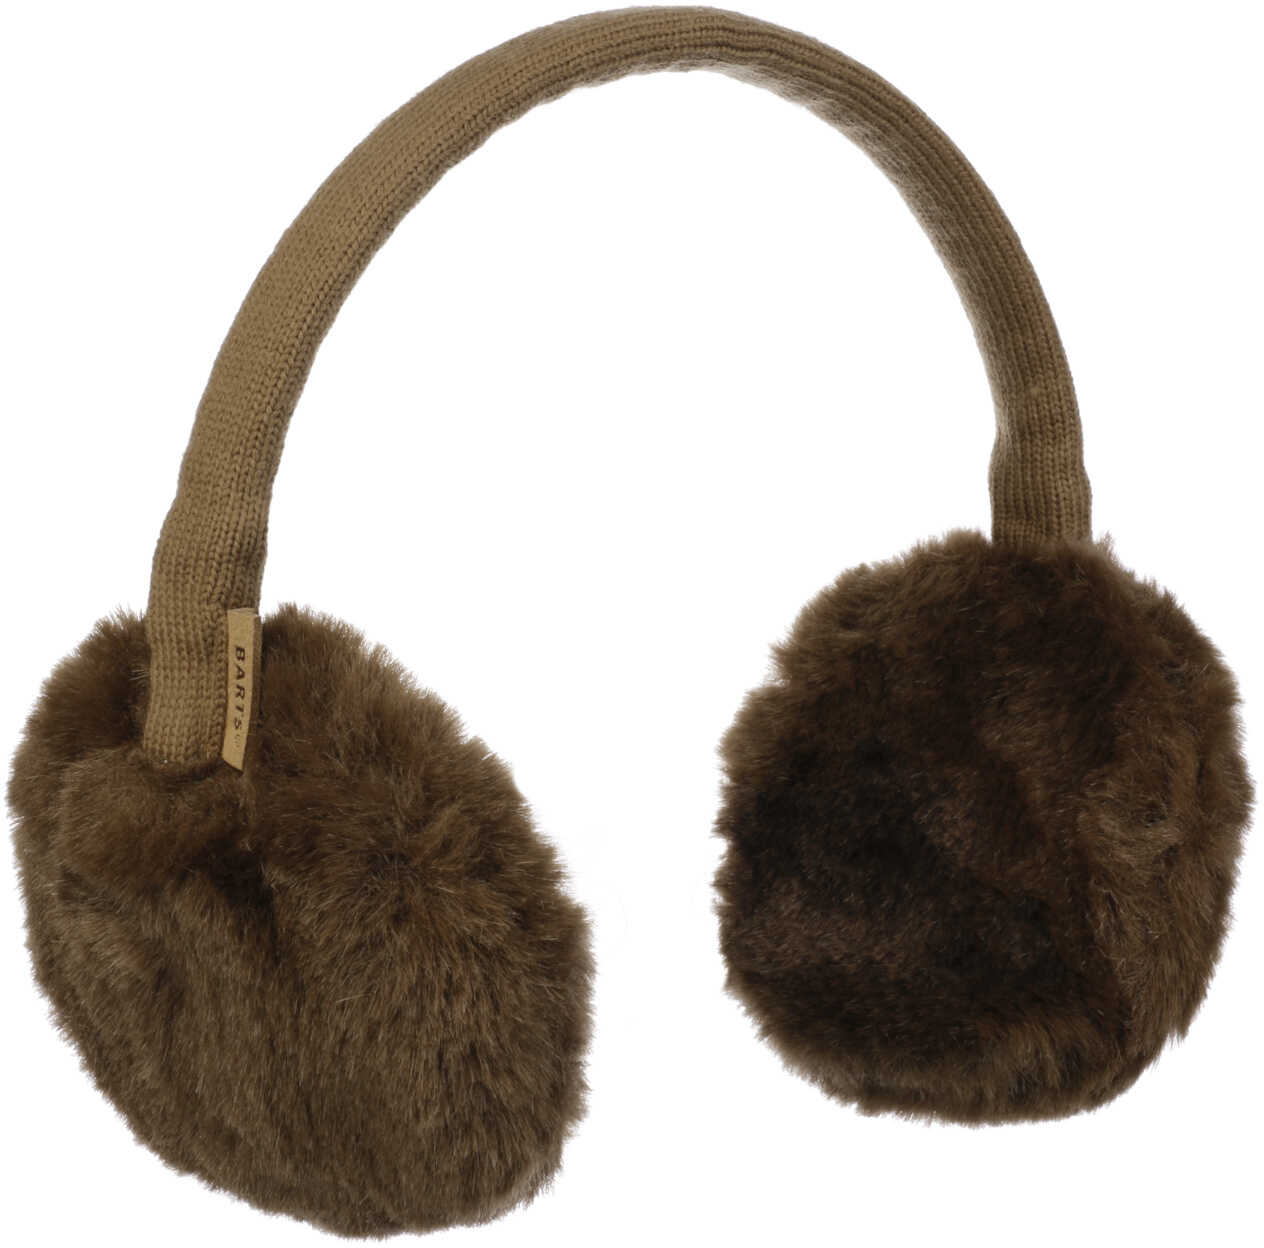 Plush Faux Fur Ear Warmers by Barts, brązowy, One Size